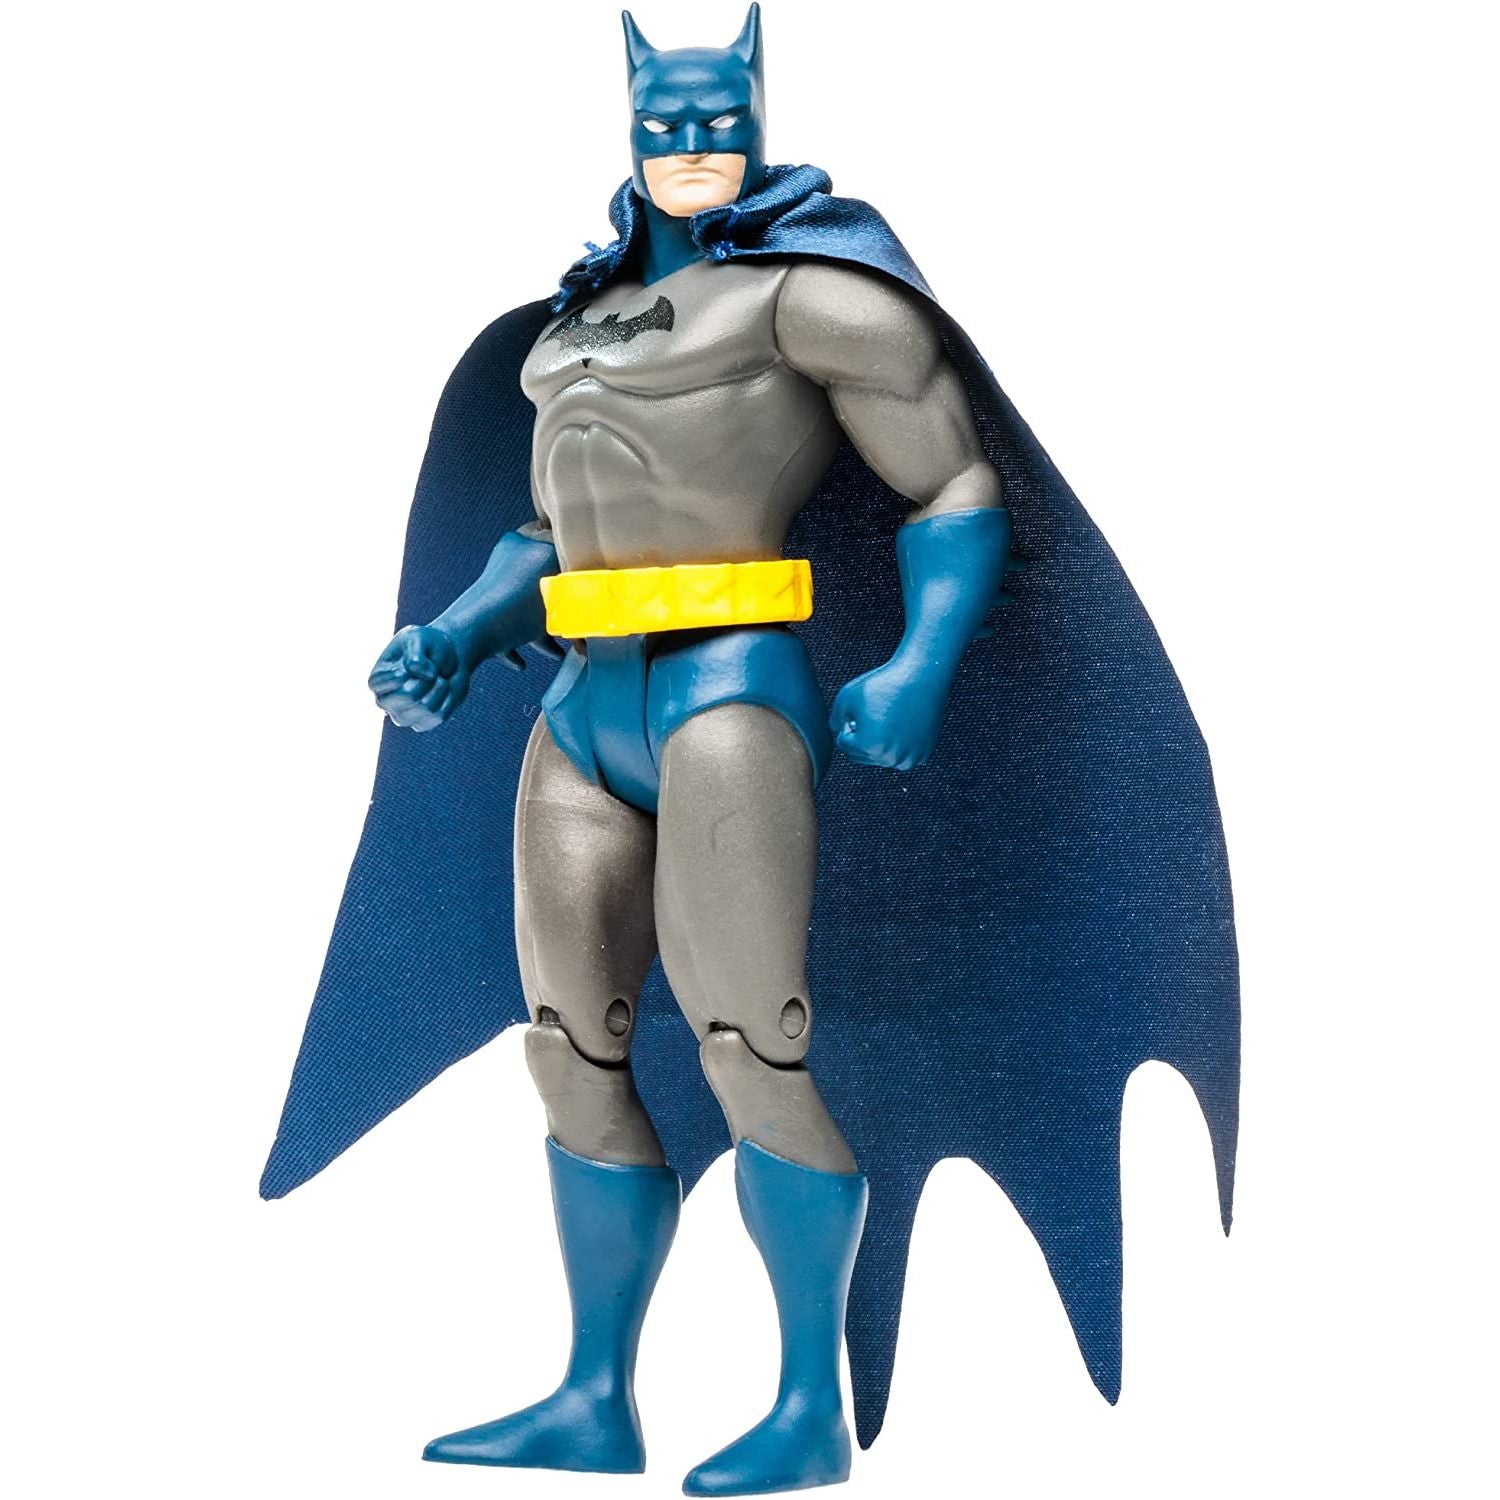 DC Direct - Super Powers - Hush Batman Figure